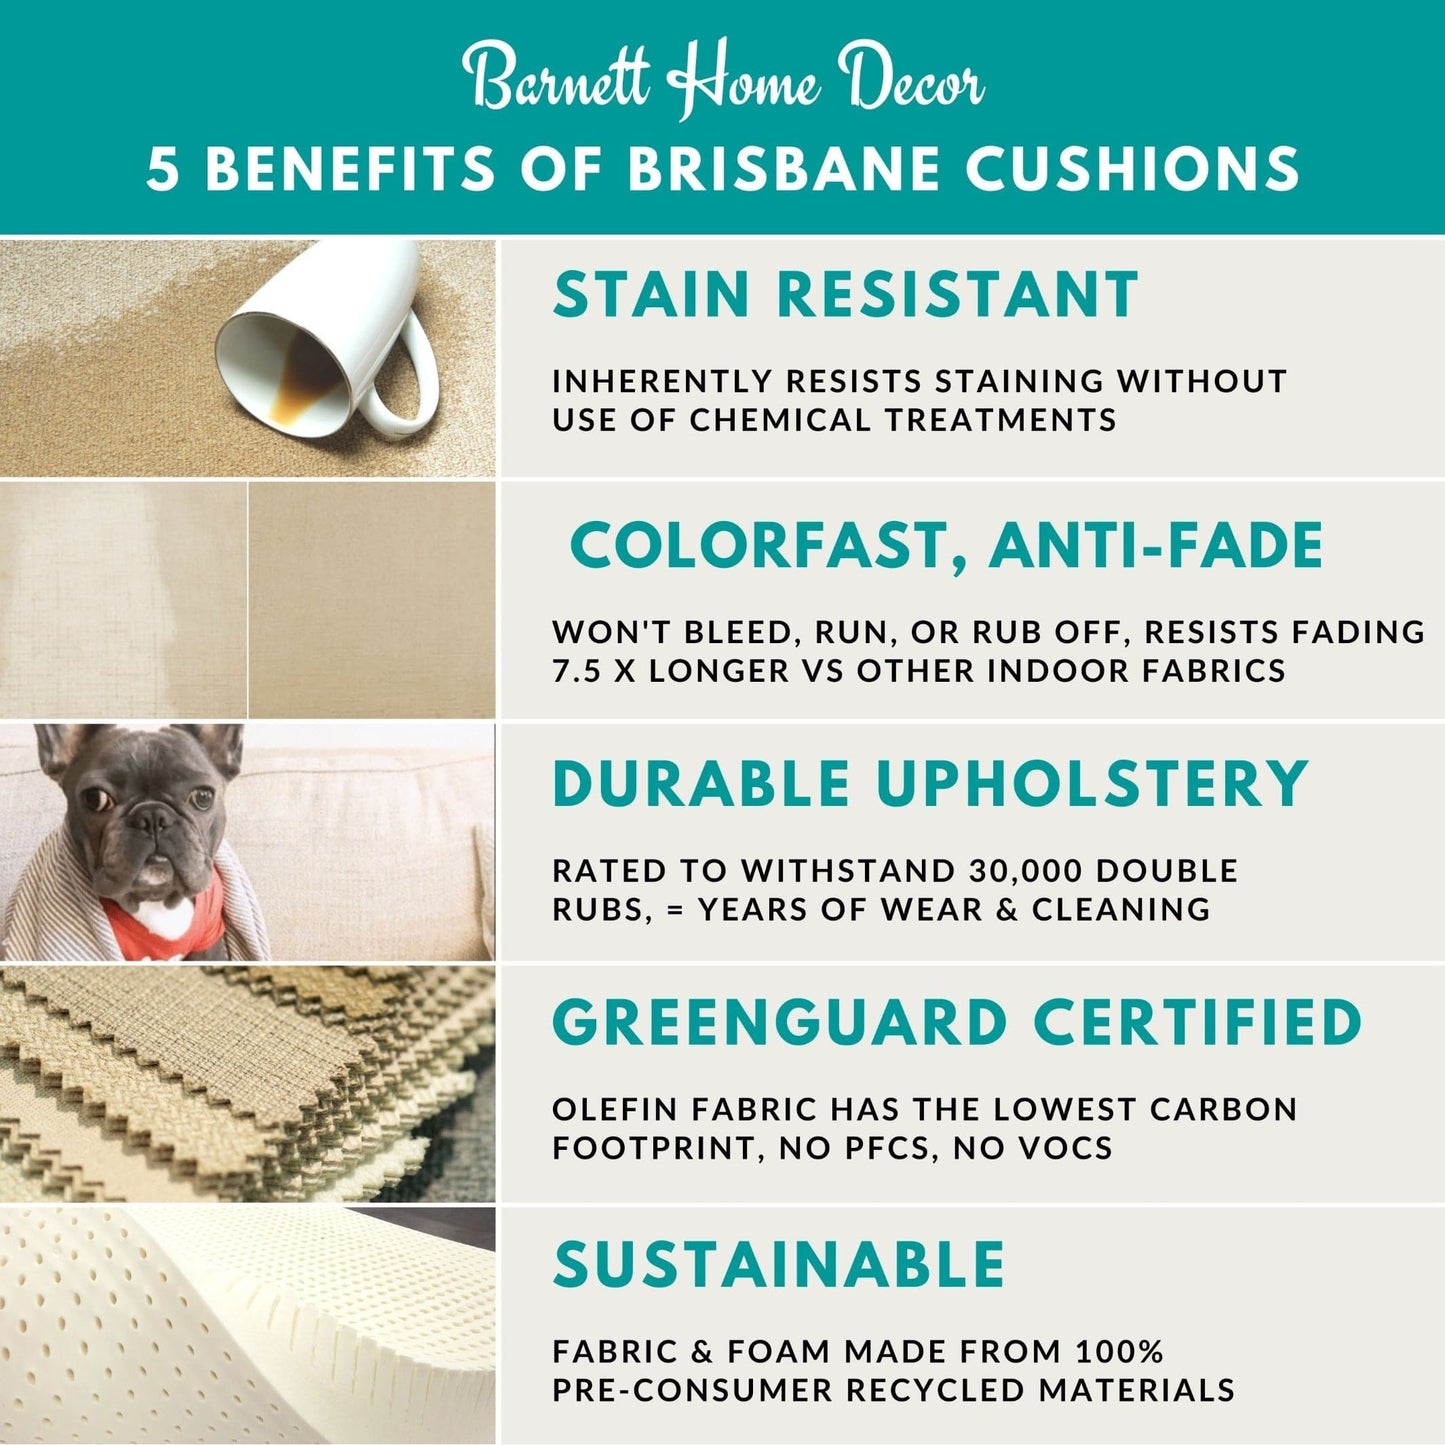 Barnett Home Decor - 5 Benefits of Brisbane Cushions